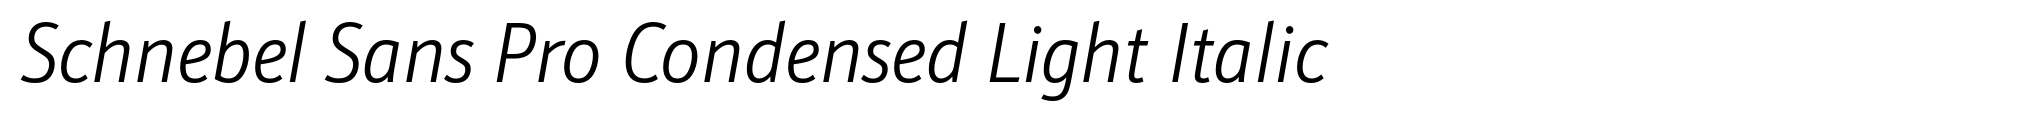 Schnebel Sans Pro Condensed Light Italic image